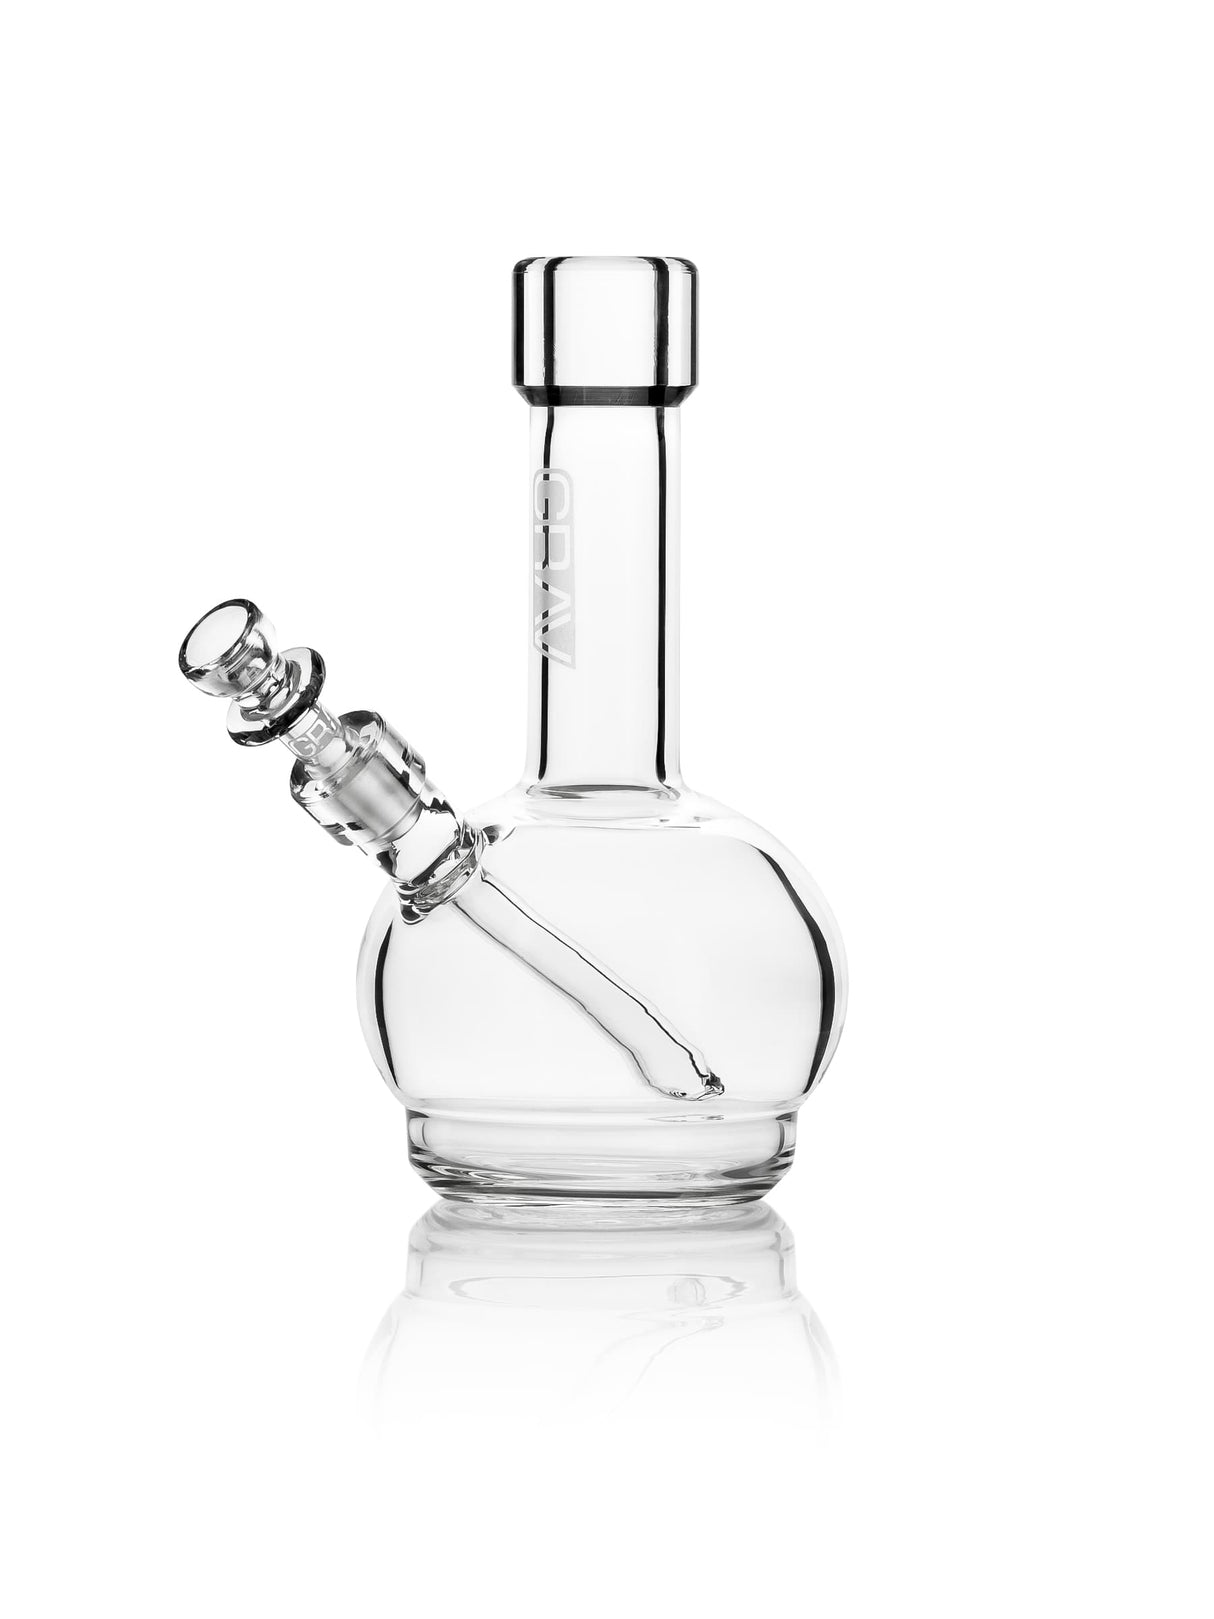 GRAV Mini Round Base Water Pipe, 6" Clear Borosilicate Glass with Slit-Diffuser Percolator, Front View